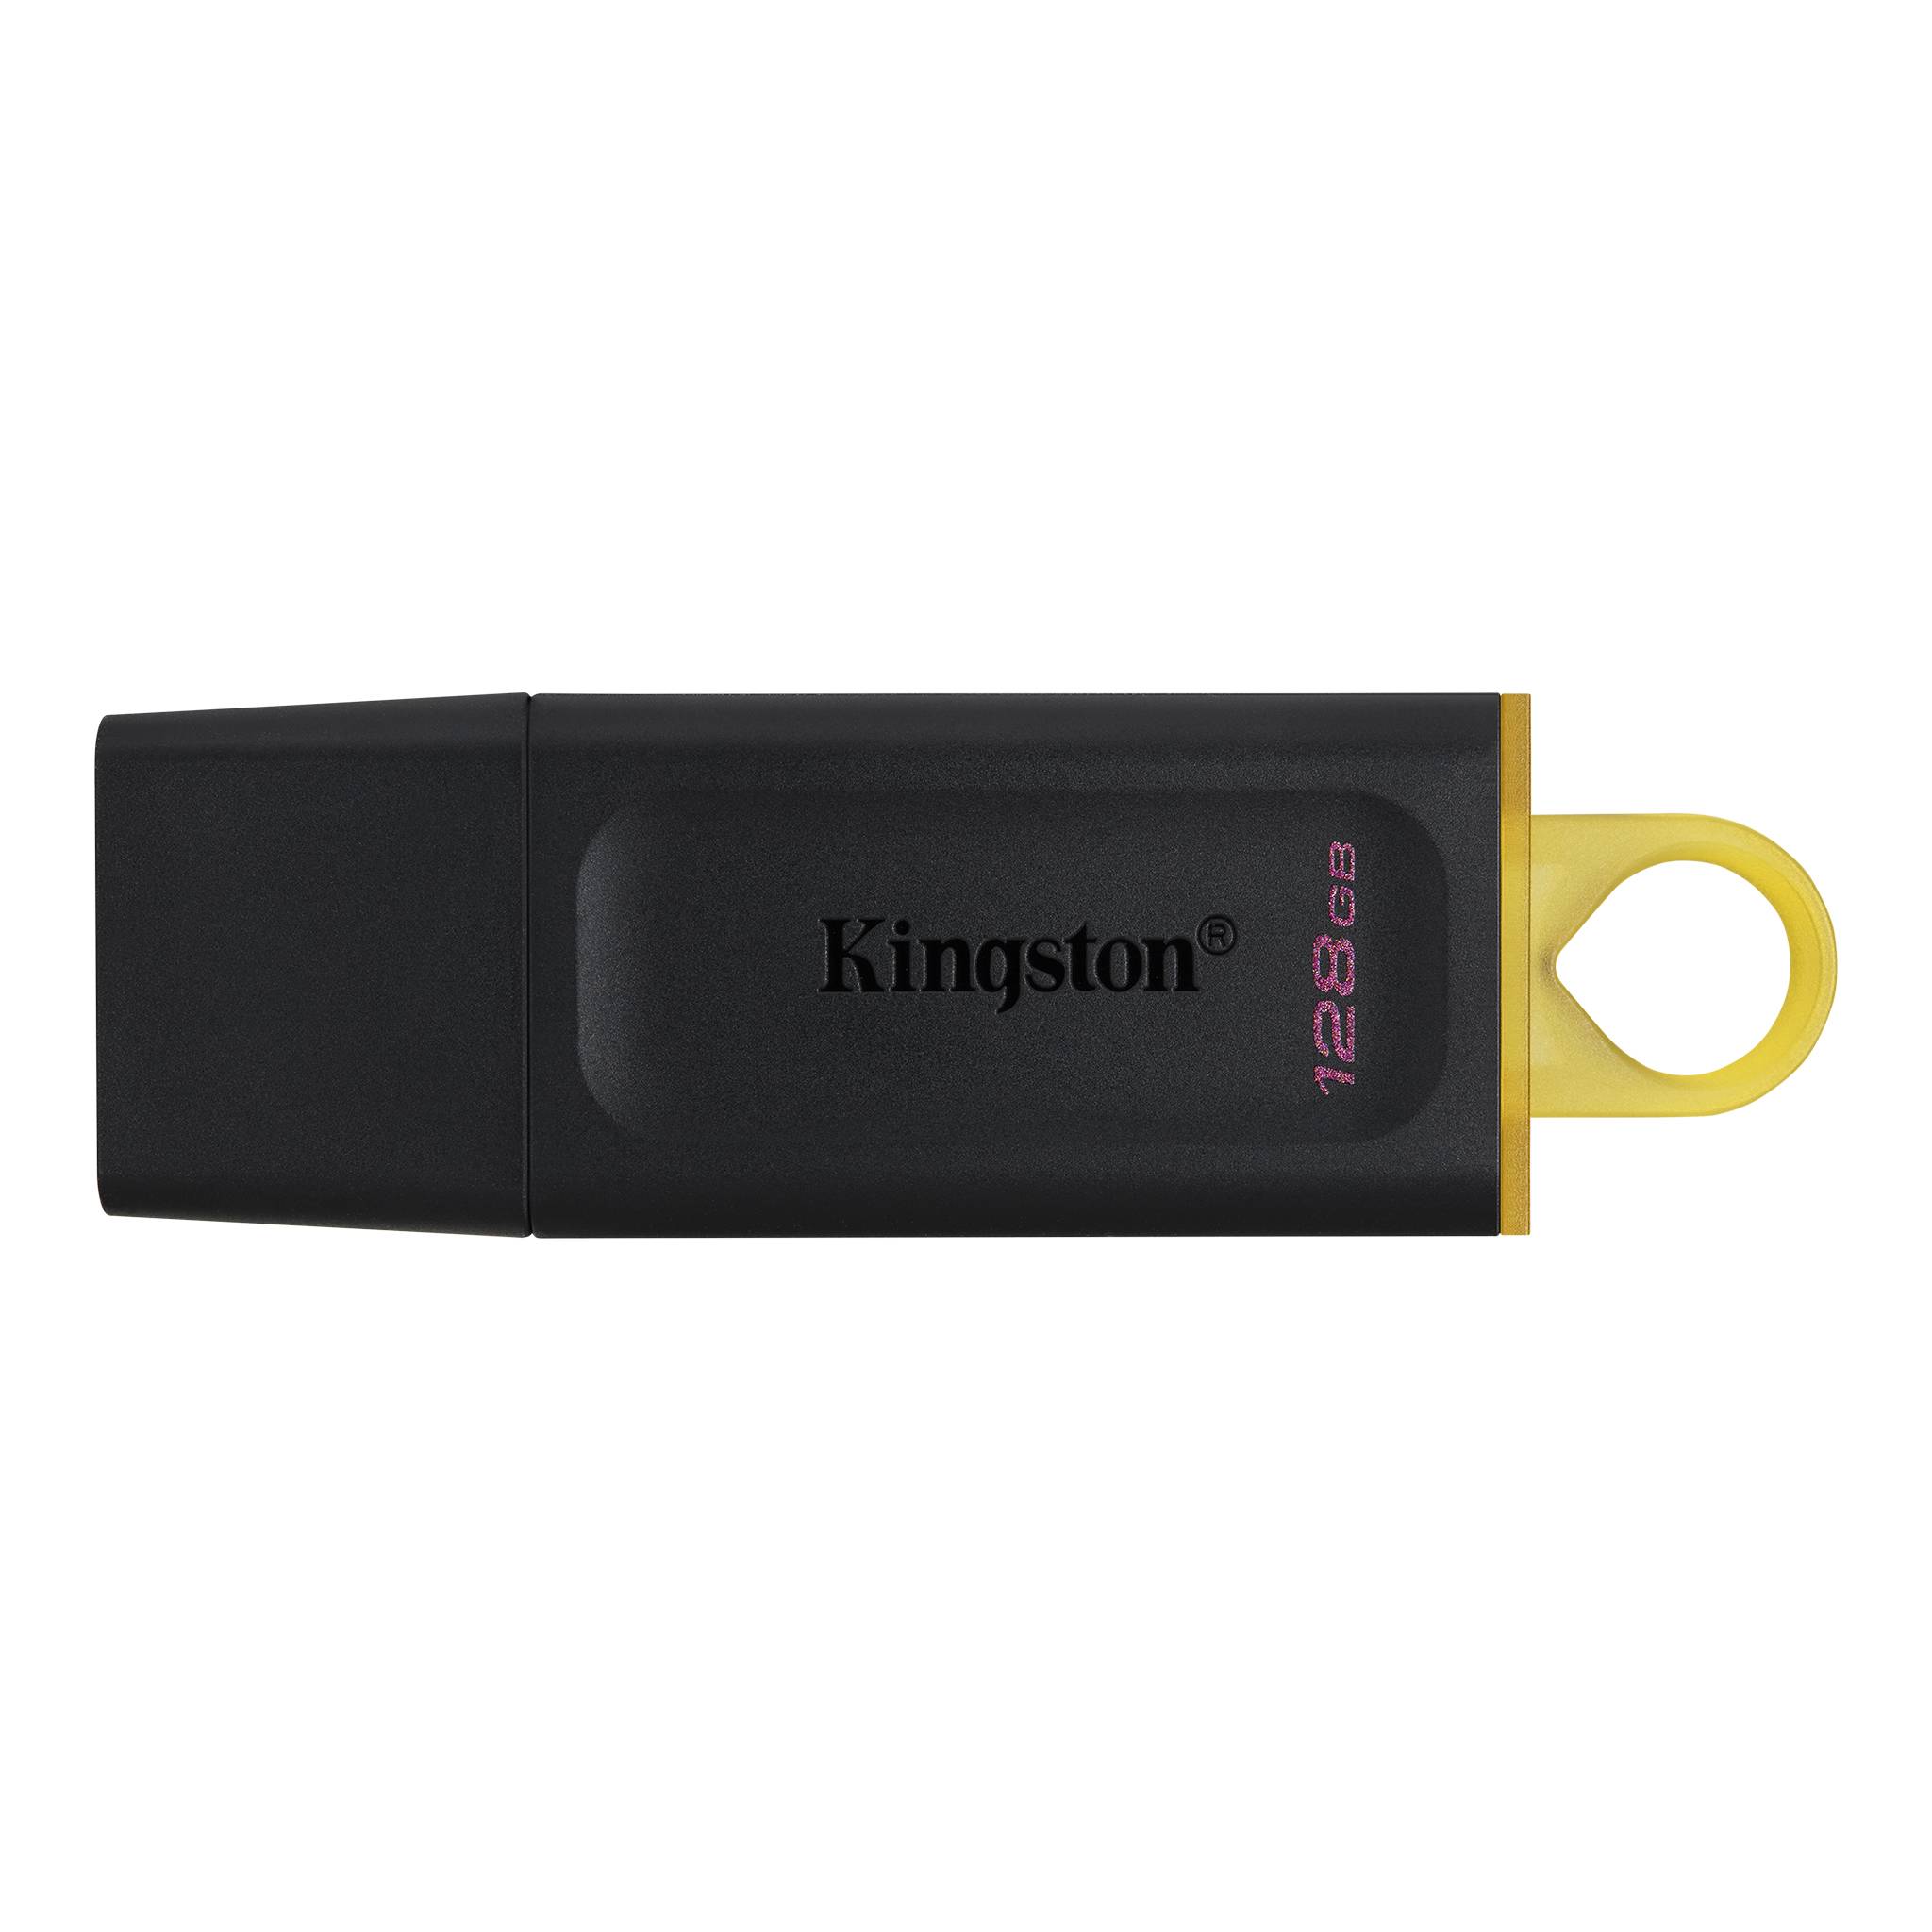 KINGSTON 128GB Pendrive USB3.0 DT100G3/128GB